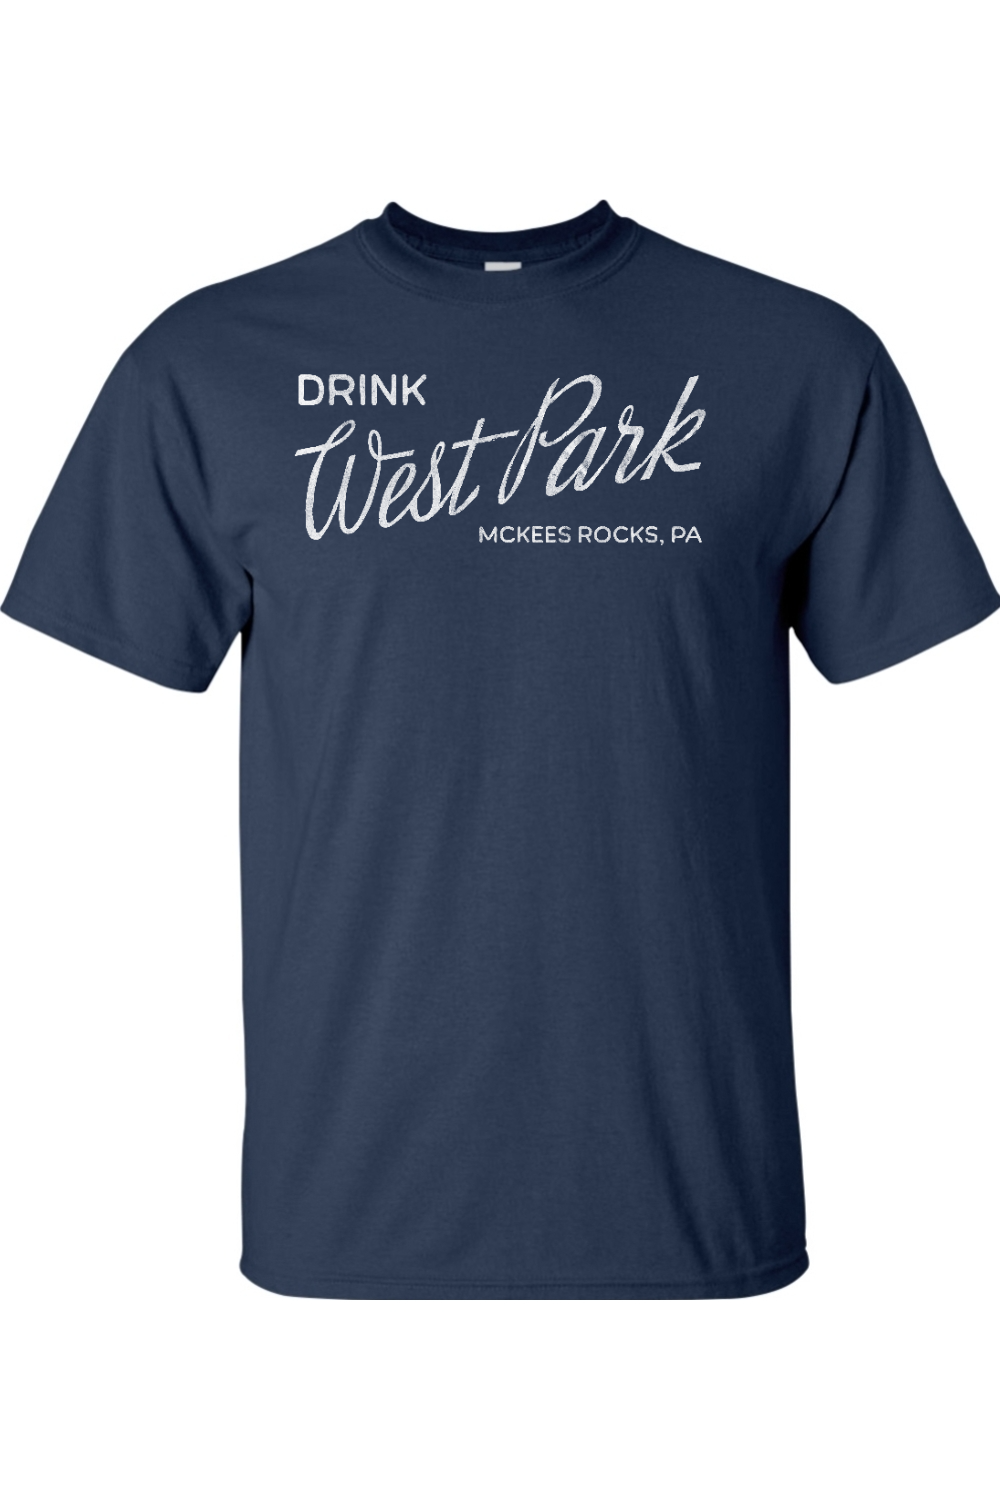 Drink West Park - Mckees Rocks, PA - Big & Tall Tee - Yinzylvania